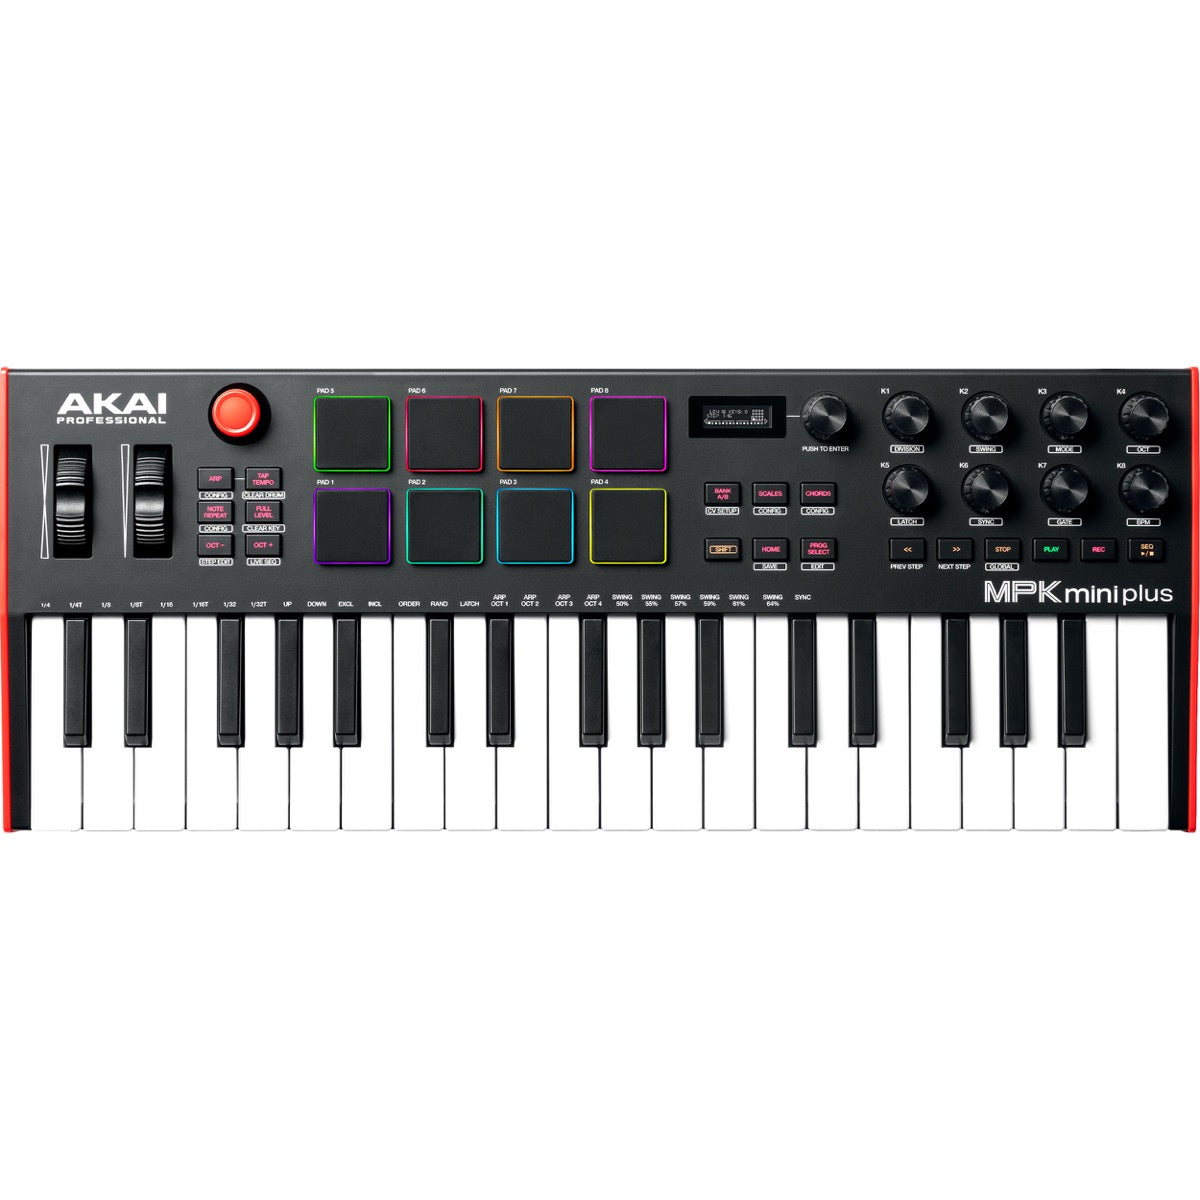 Akai Professional MPK MINI MK3 MIDI Compact Keyboard and Pad Controller